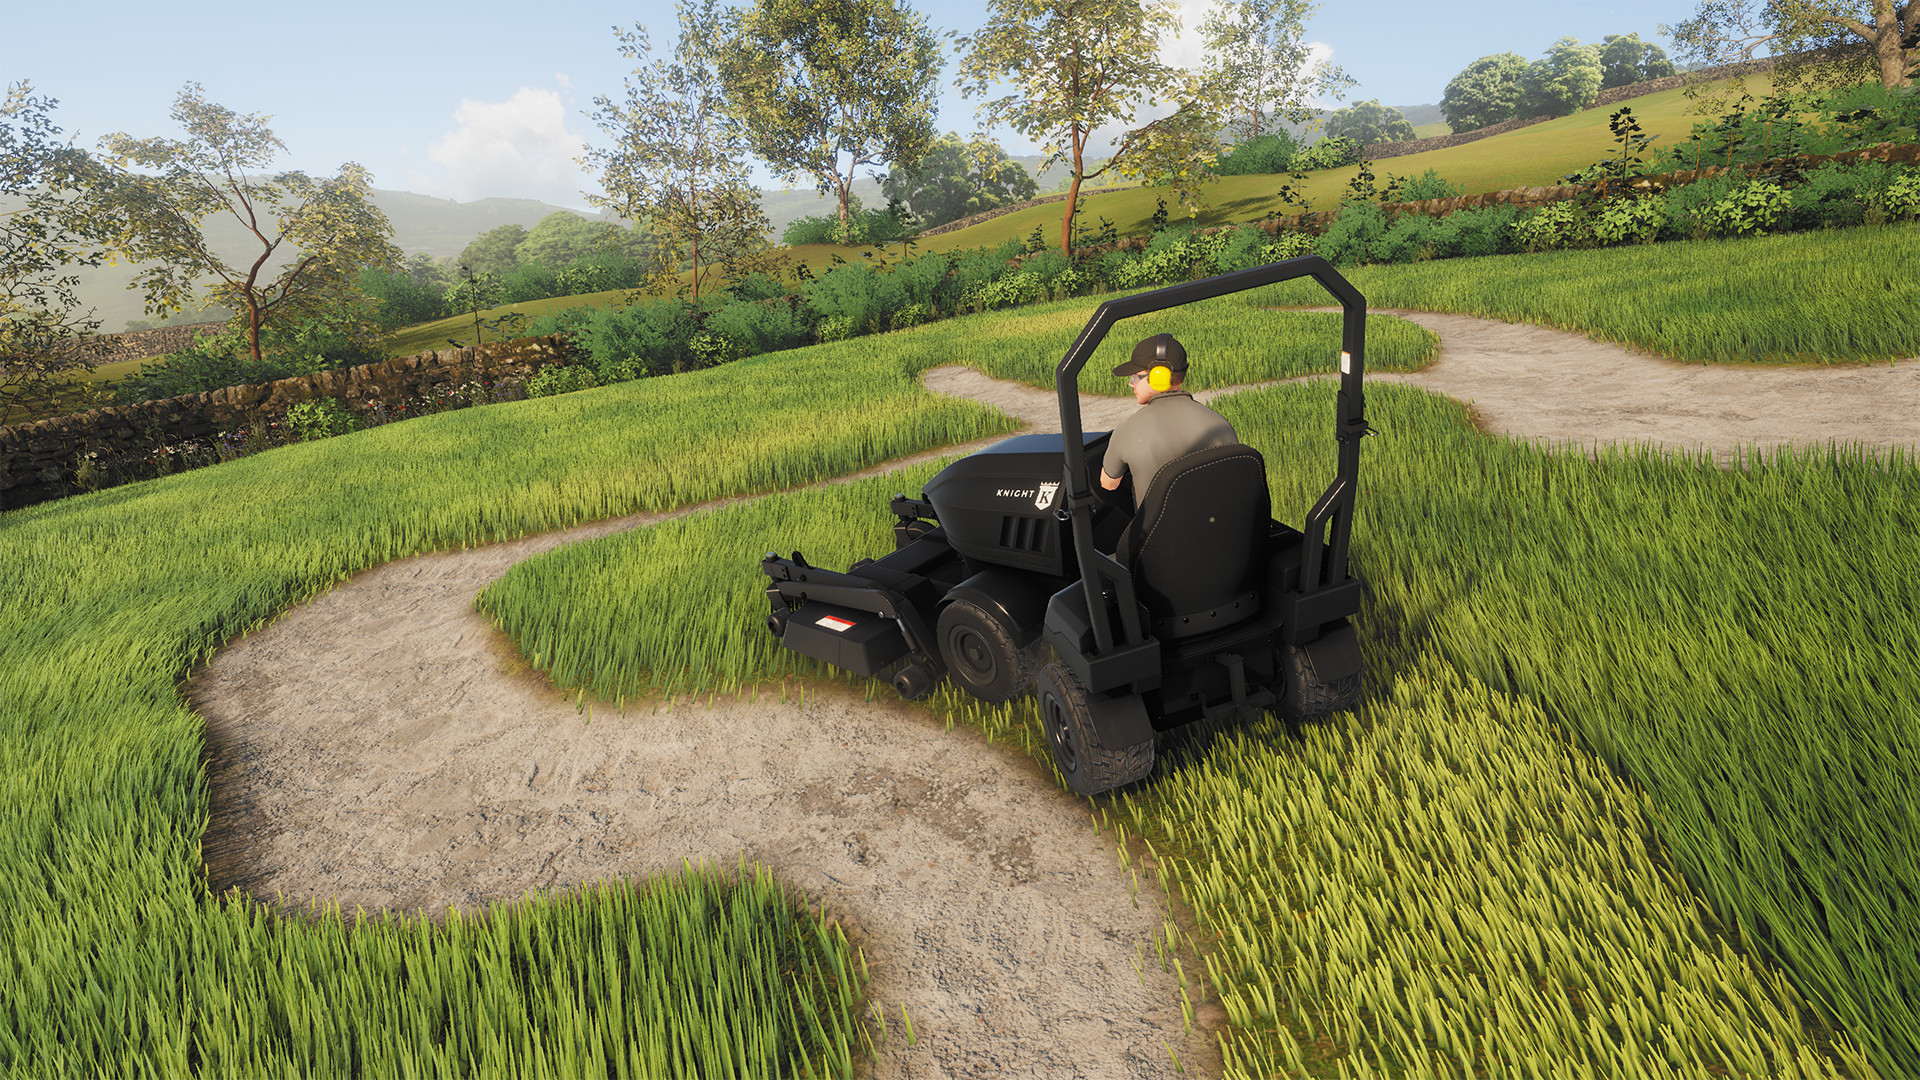 Lawn Mowing Simulator - Ancient Britain DLC Steam CD Key